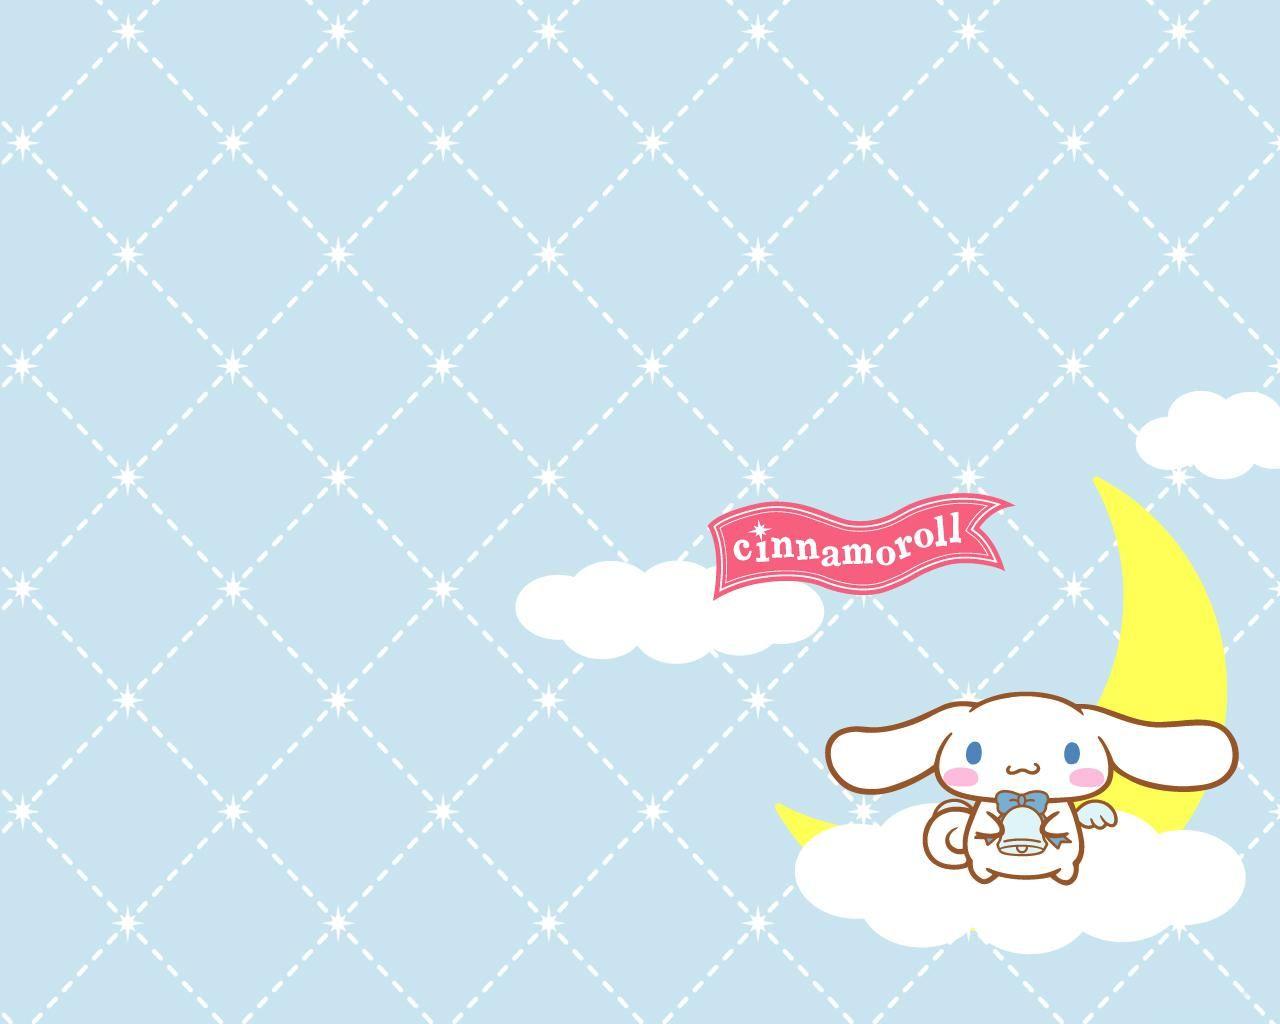 Cinnamoroll Pastel Party Wallpaper For Desktop  Mobile